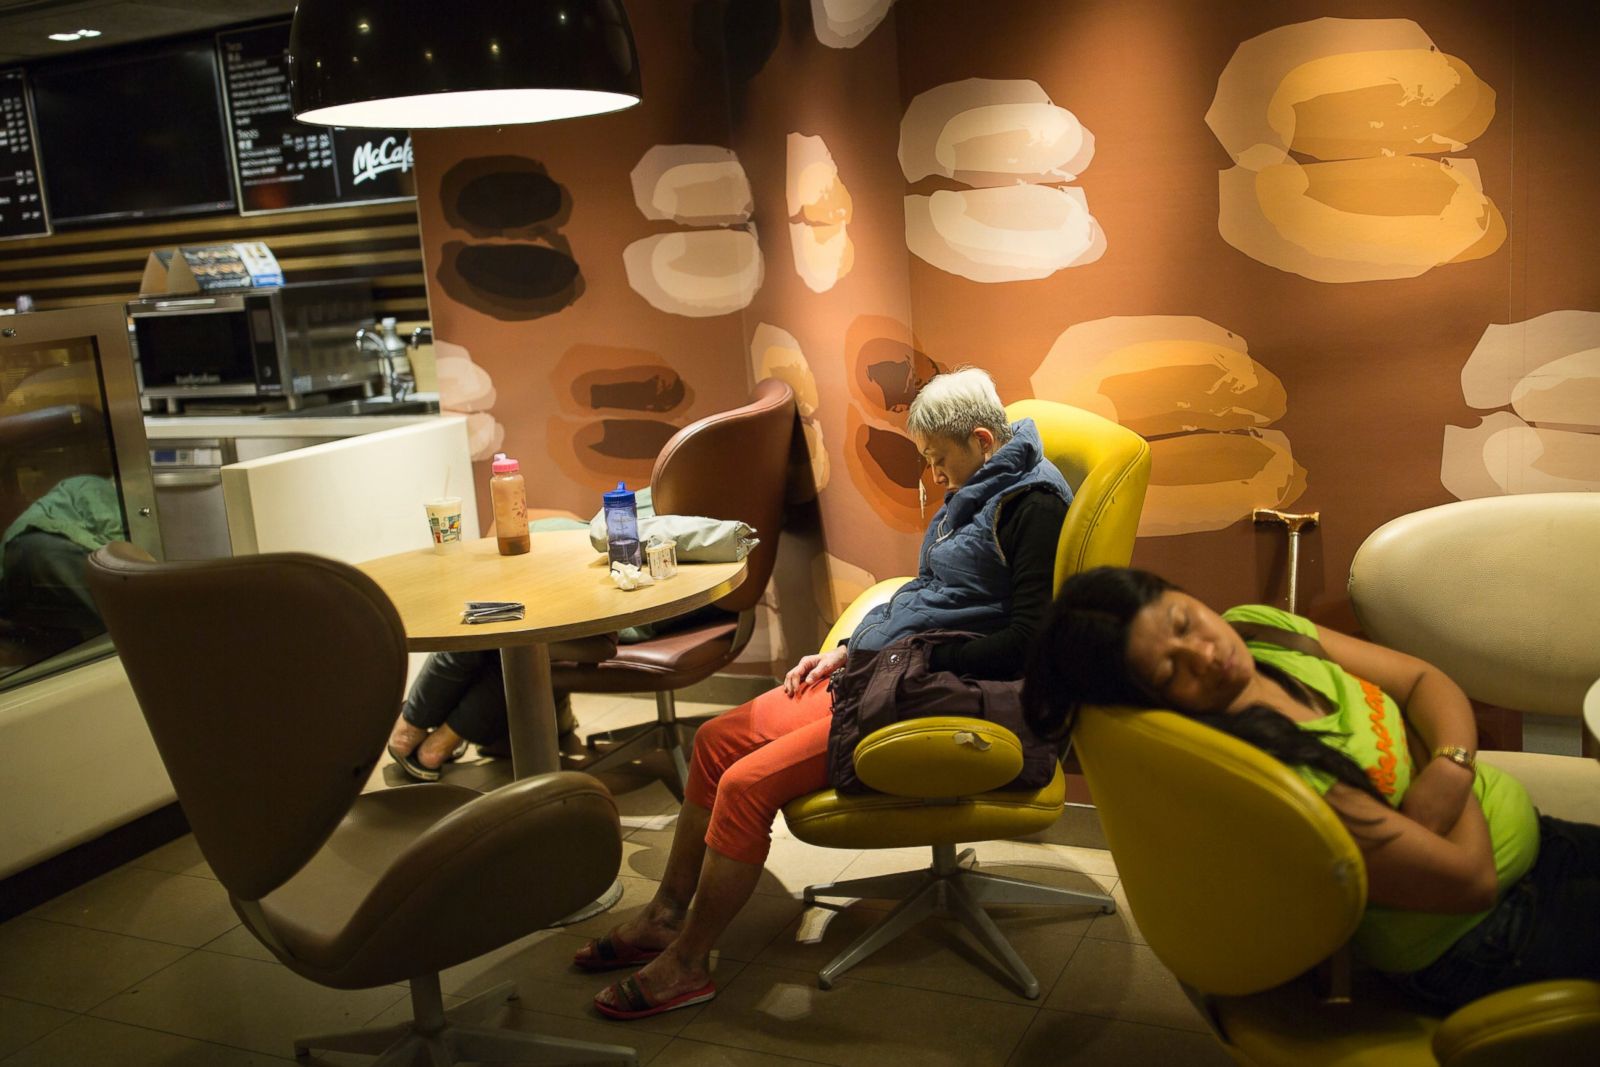 Picture | Sleepers Haunt Hong Kong McDonald's Restaurants - ABC News1600 x 1067